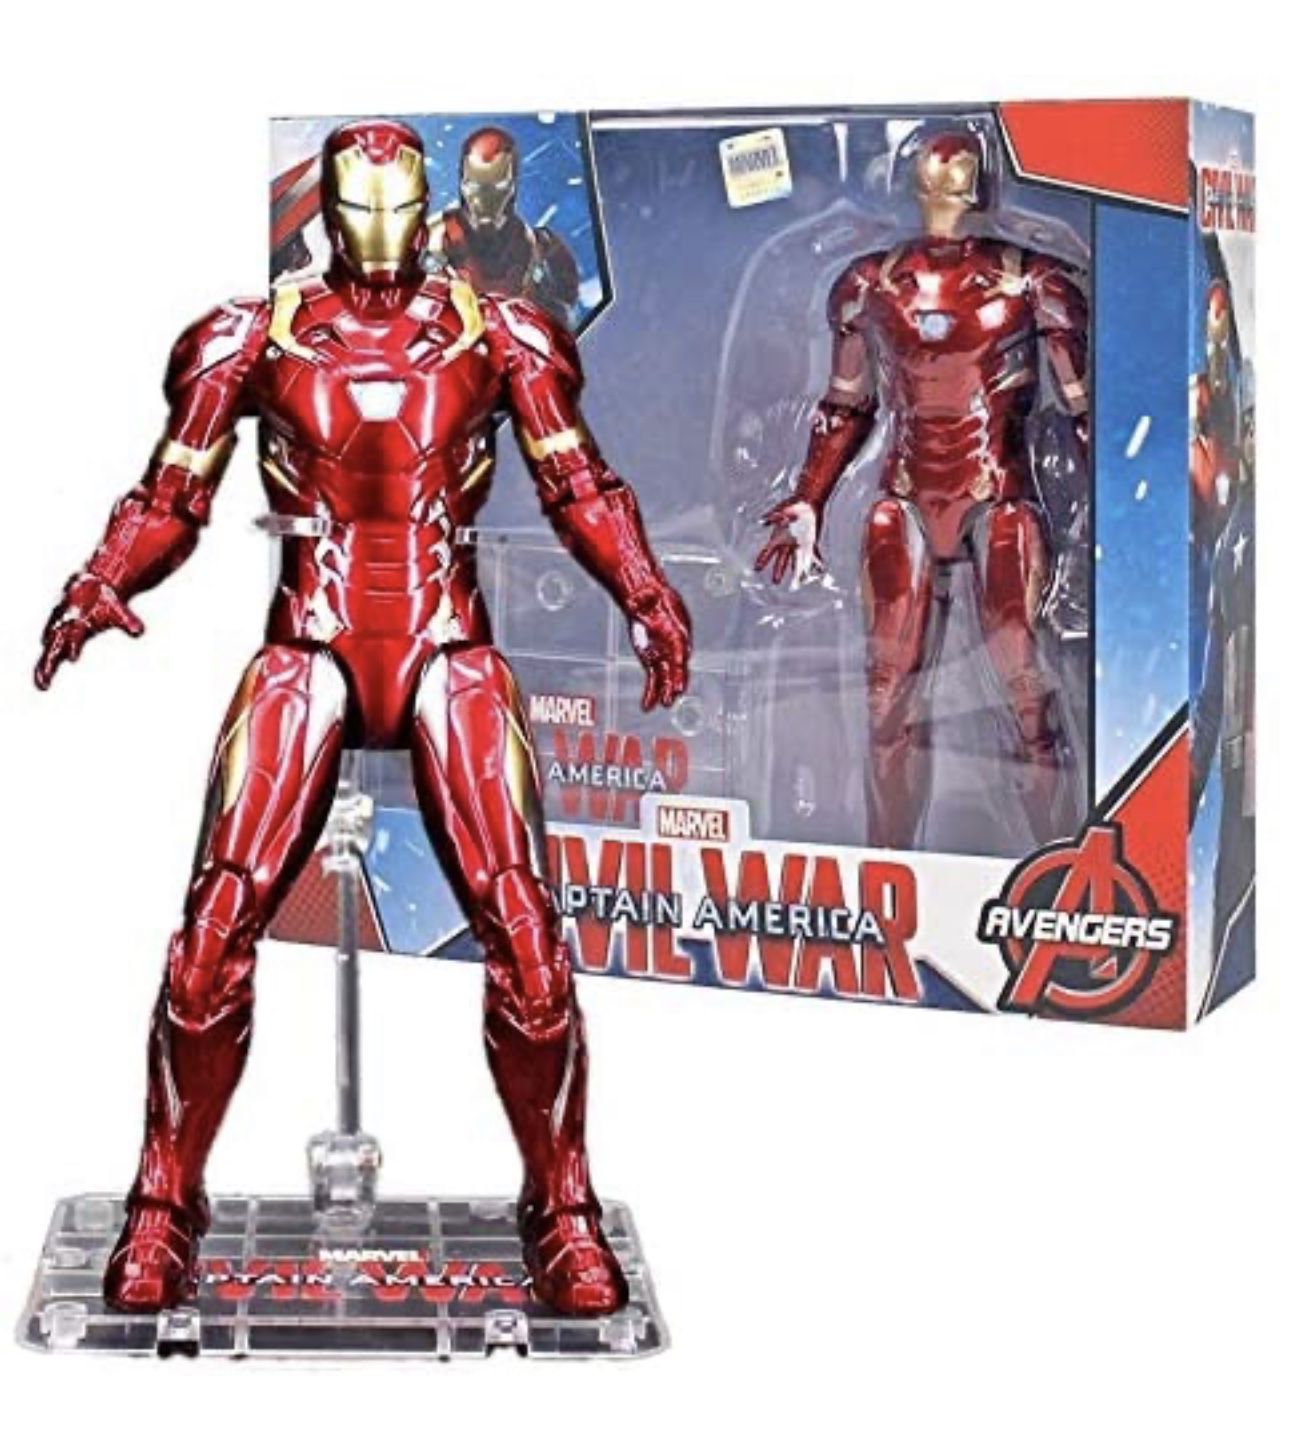 Captain America 3 - Civil War 7 inches Iron Man Action Figures